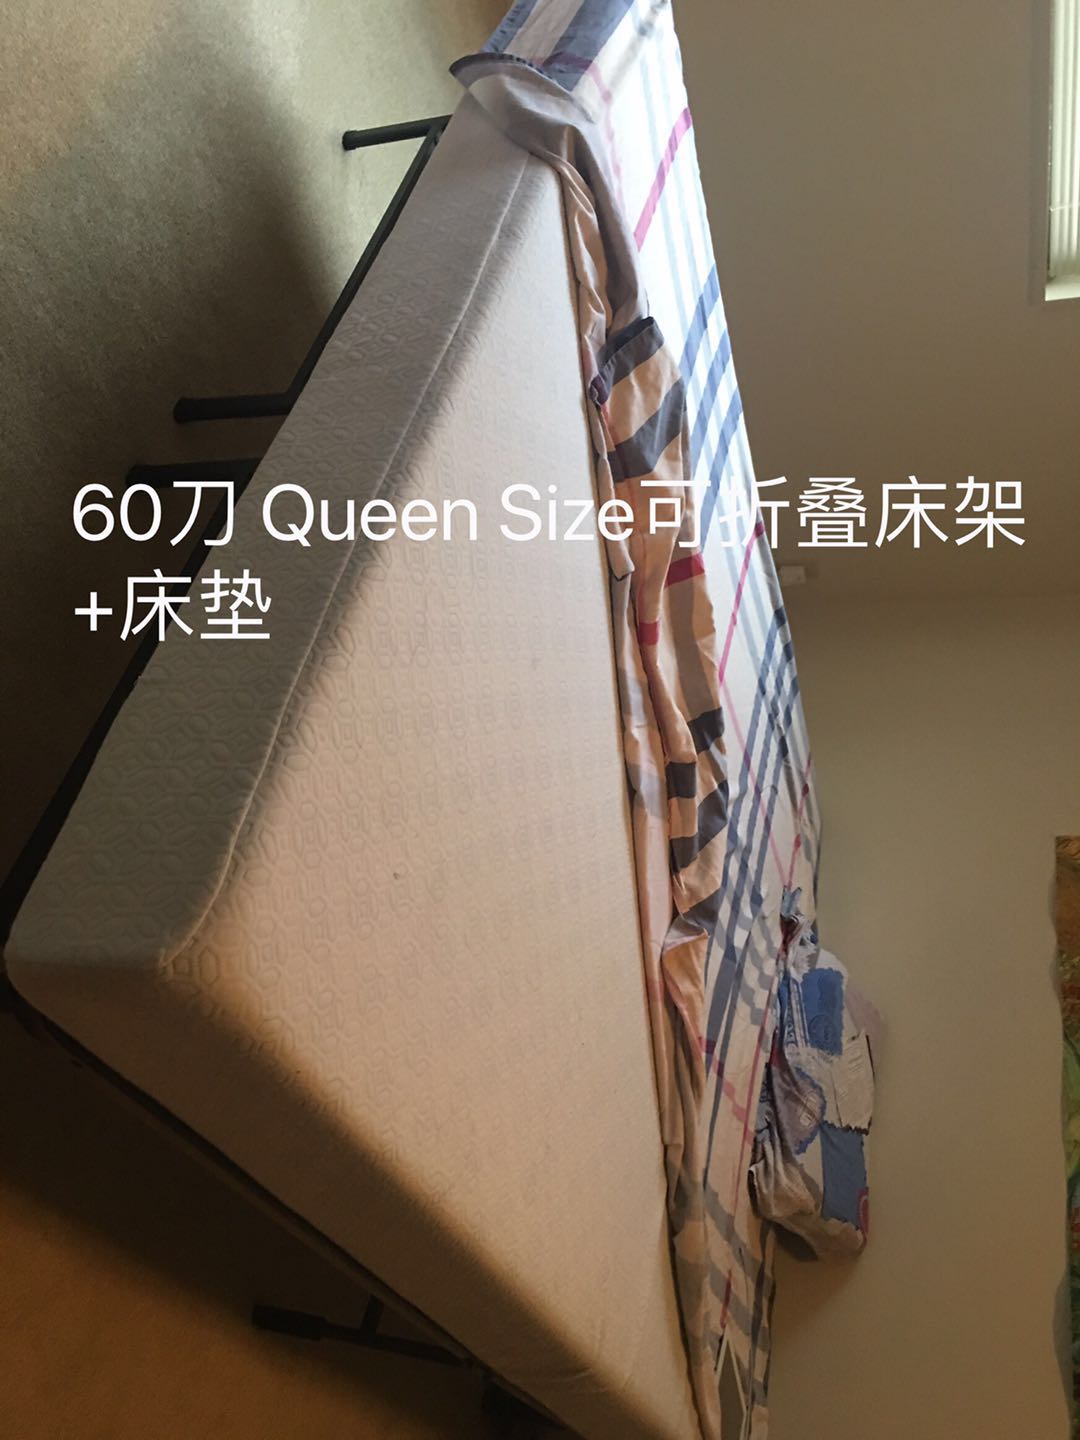 queen size 床+.jpg